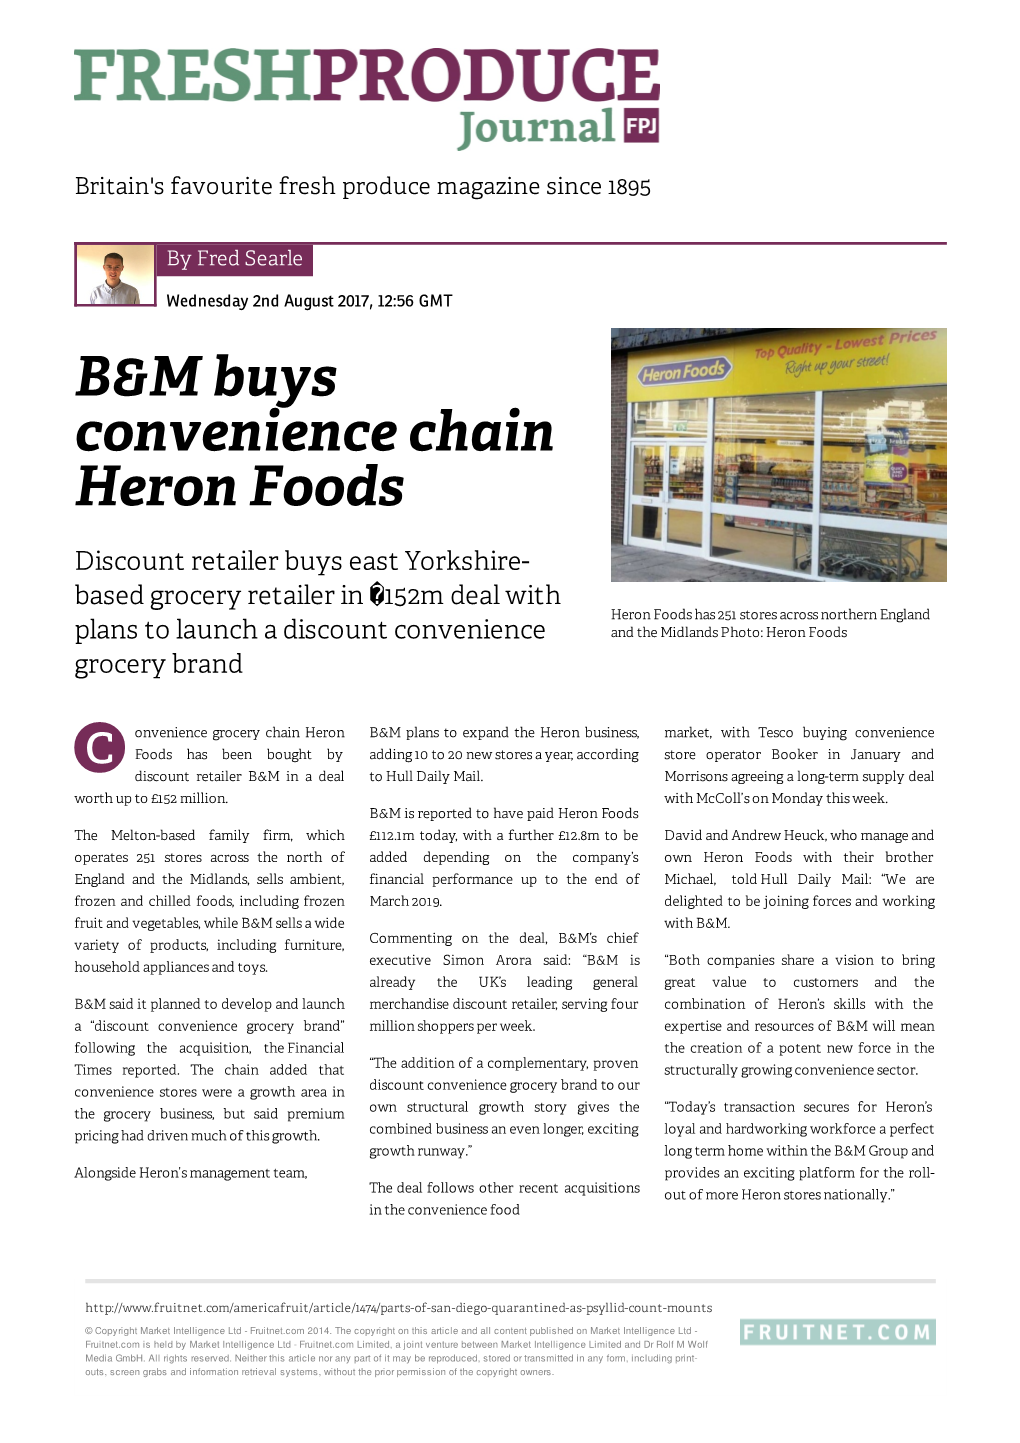 B&M Buys Convenience Chain Heron Foods